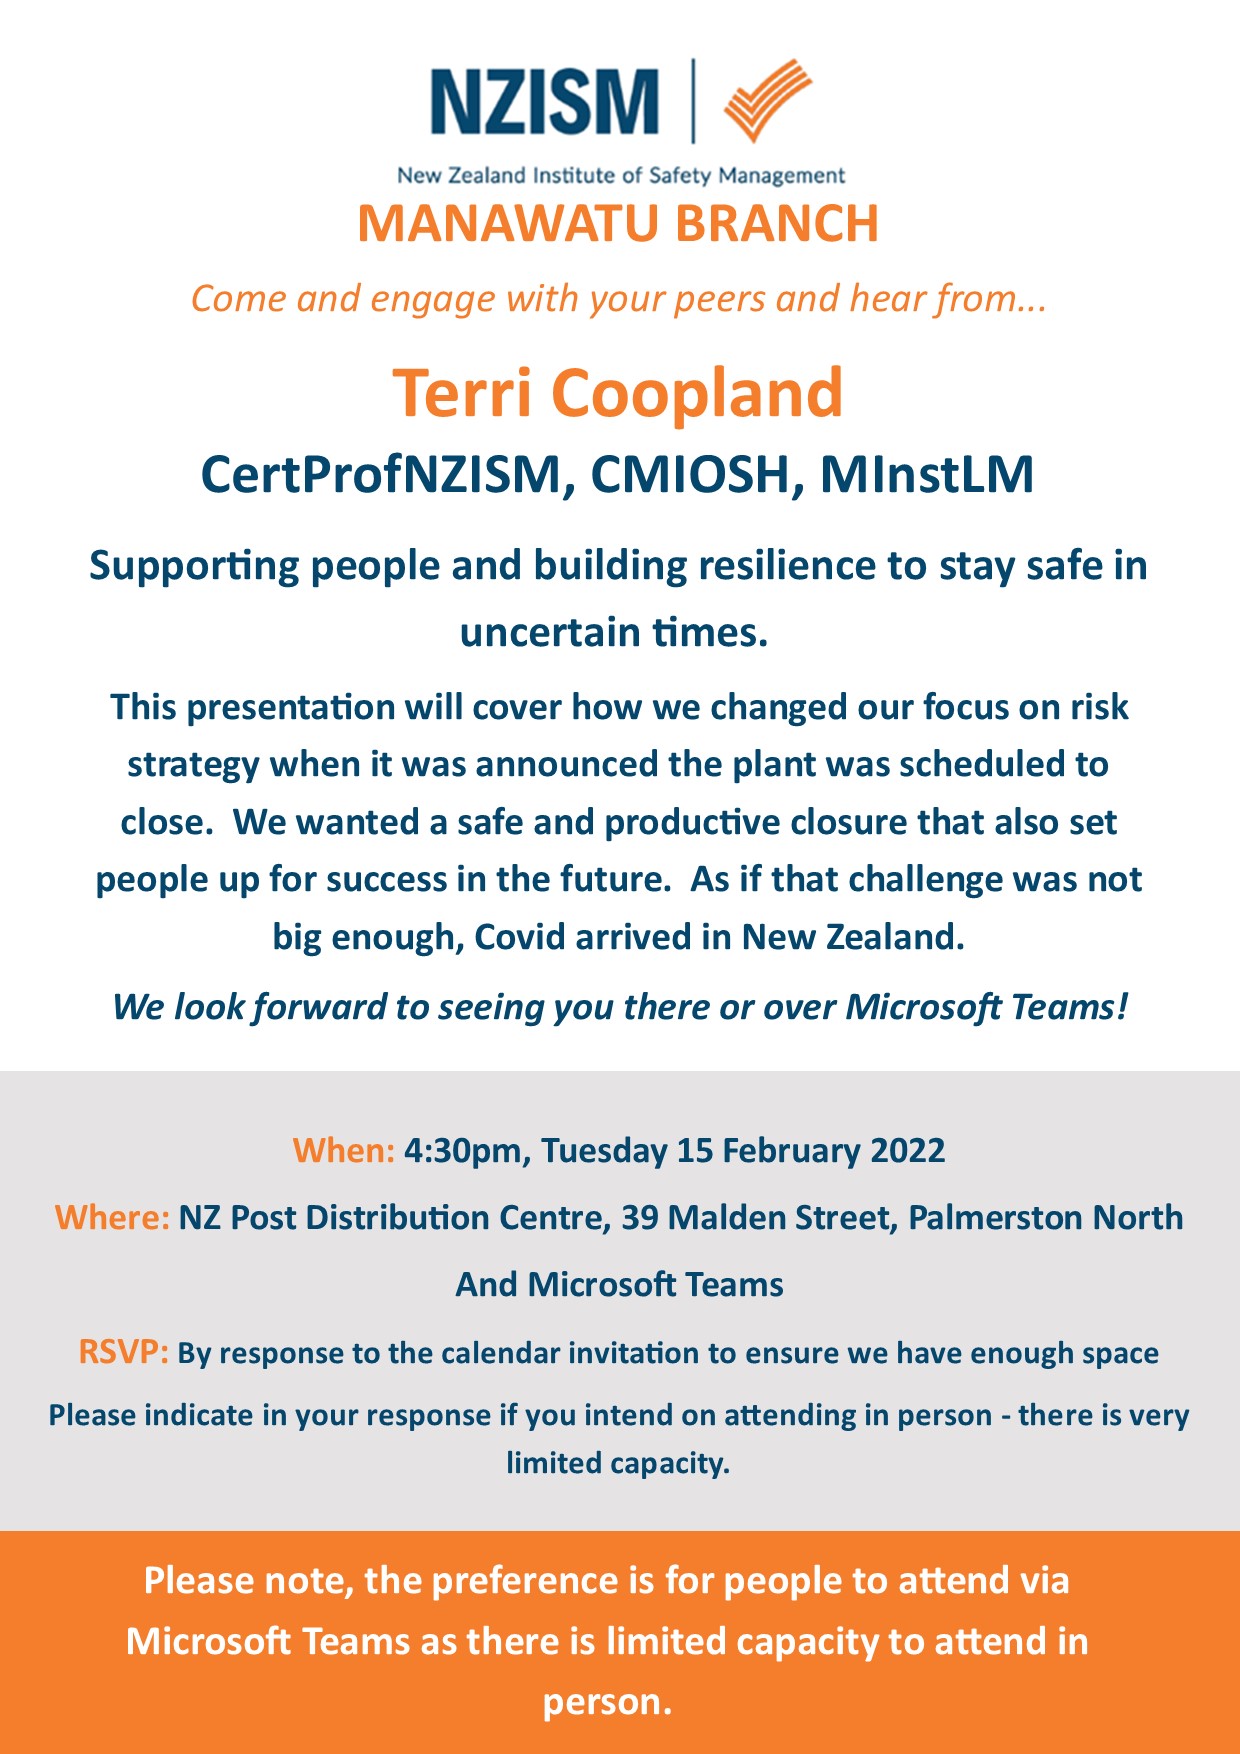 image for Manawatu Branch: Terri Coopland Presentation